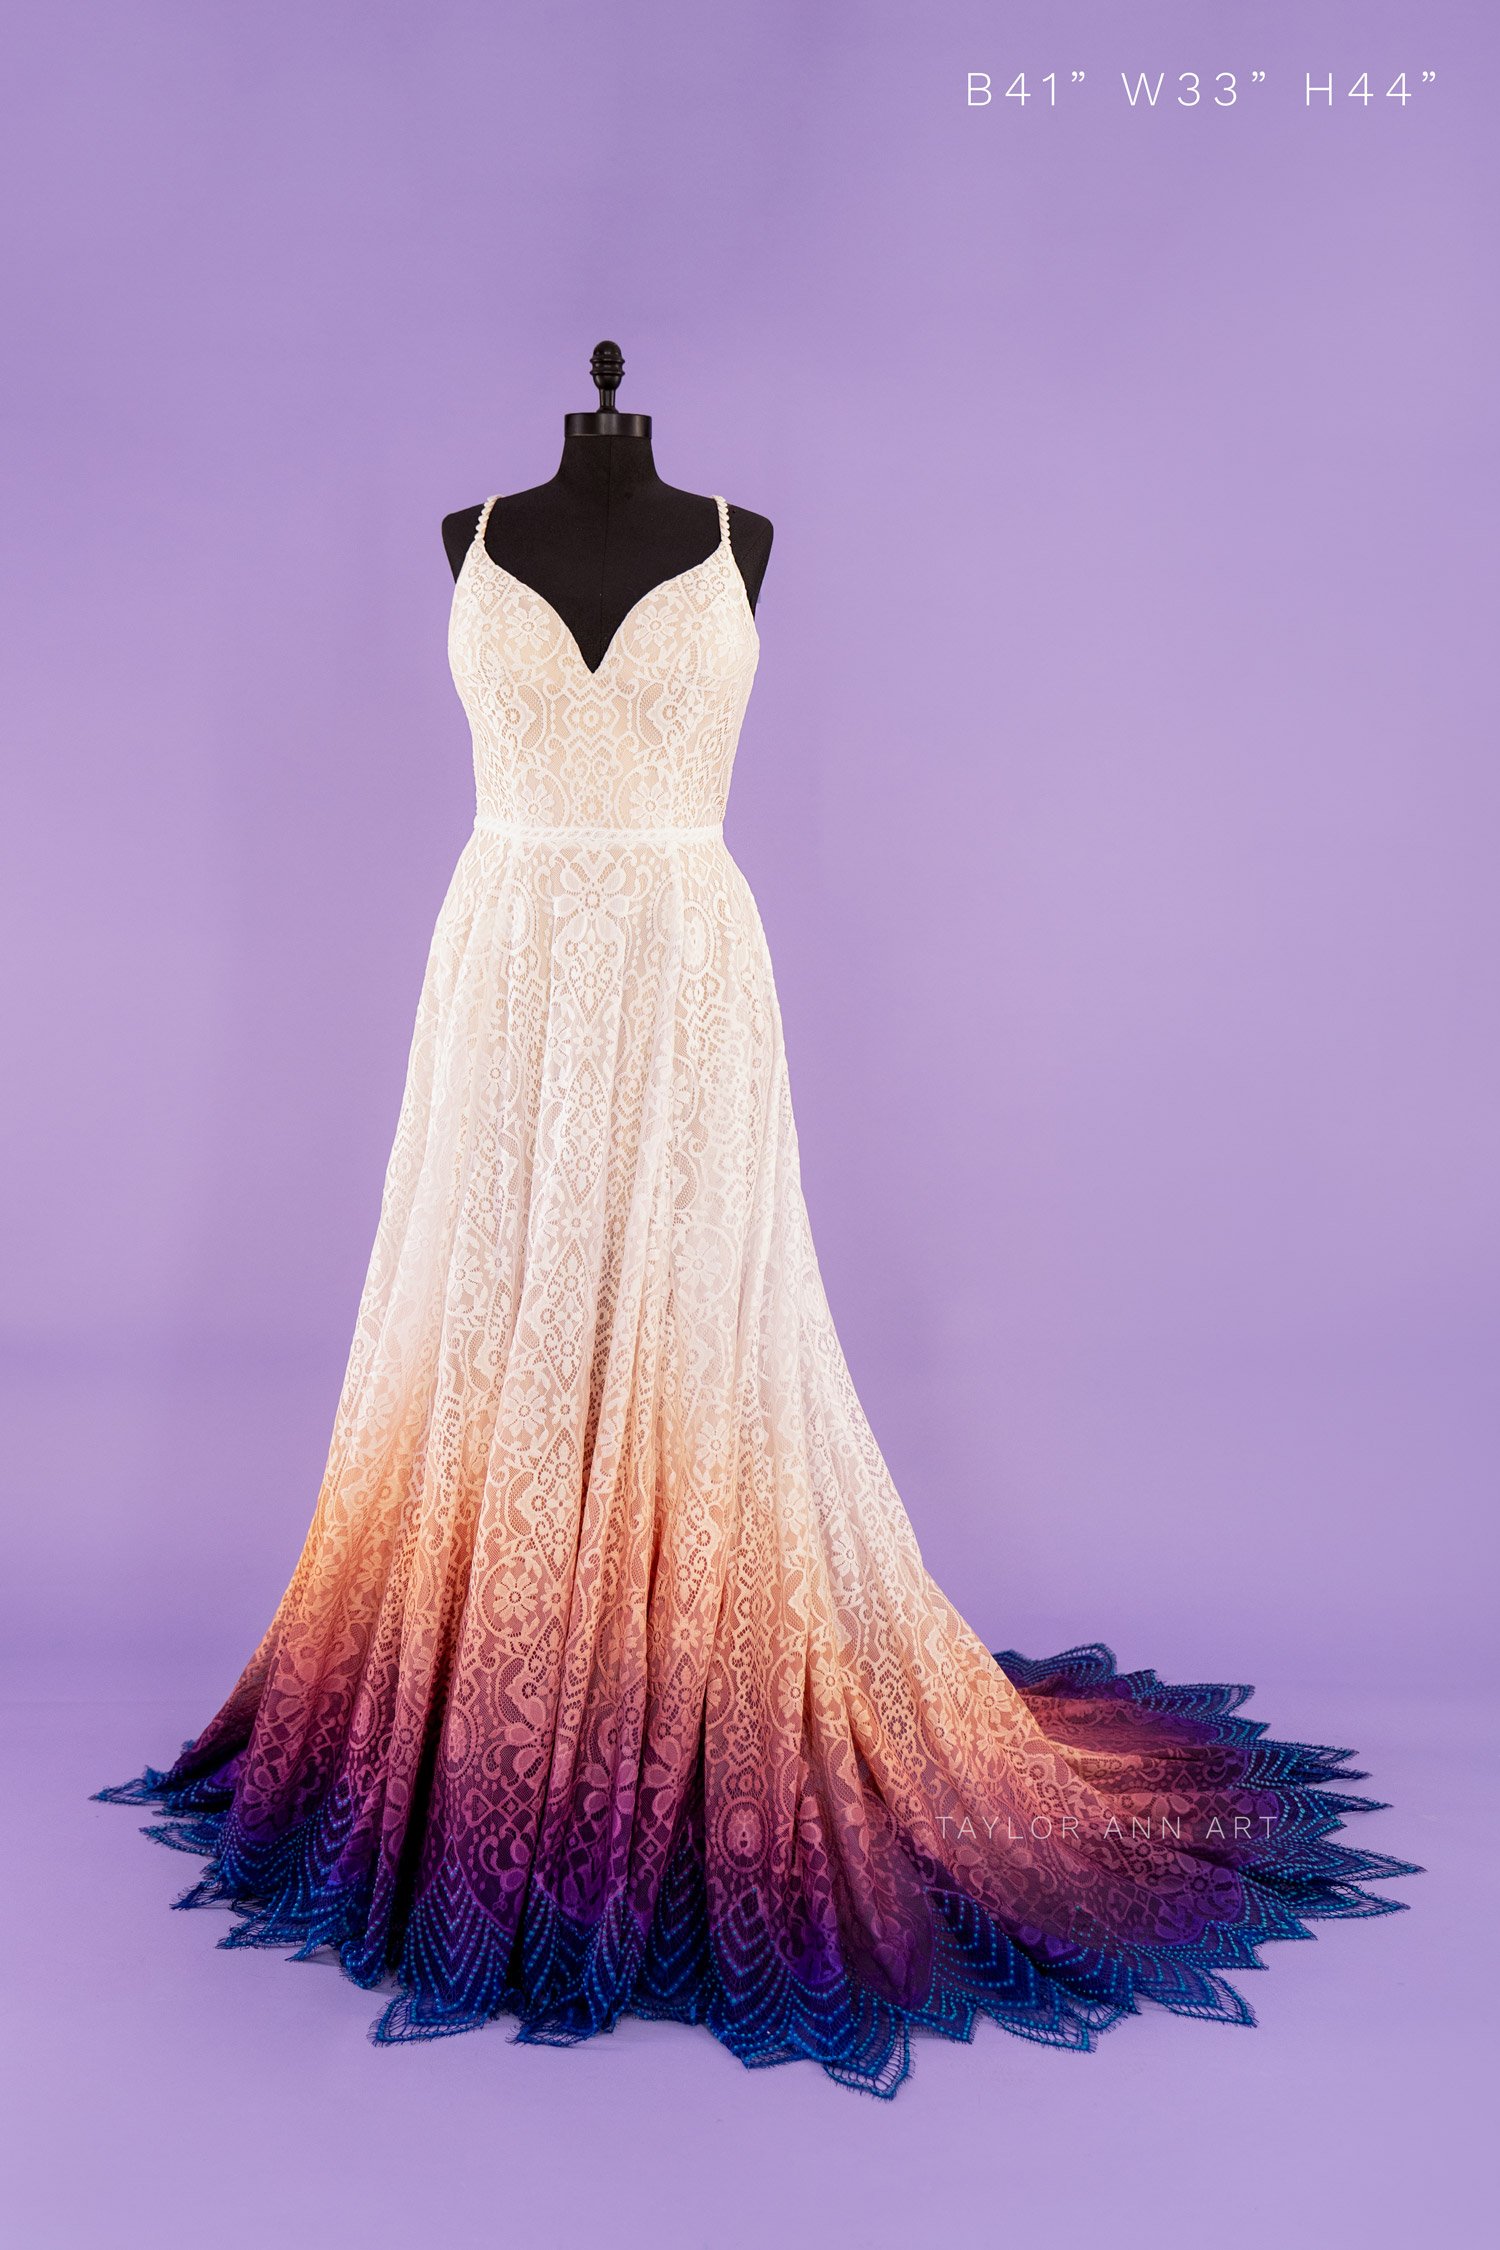 13+ Painted Wedding Dress - CajaReyner